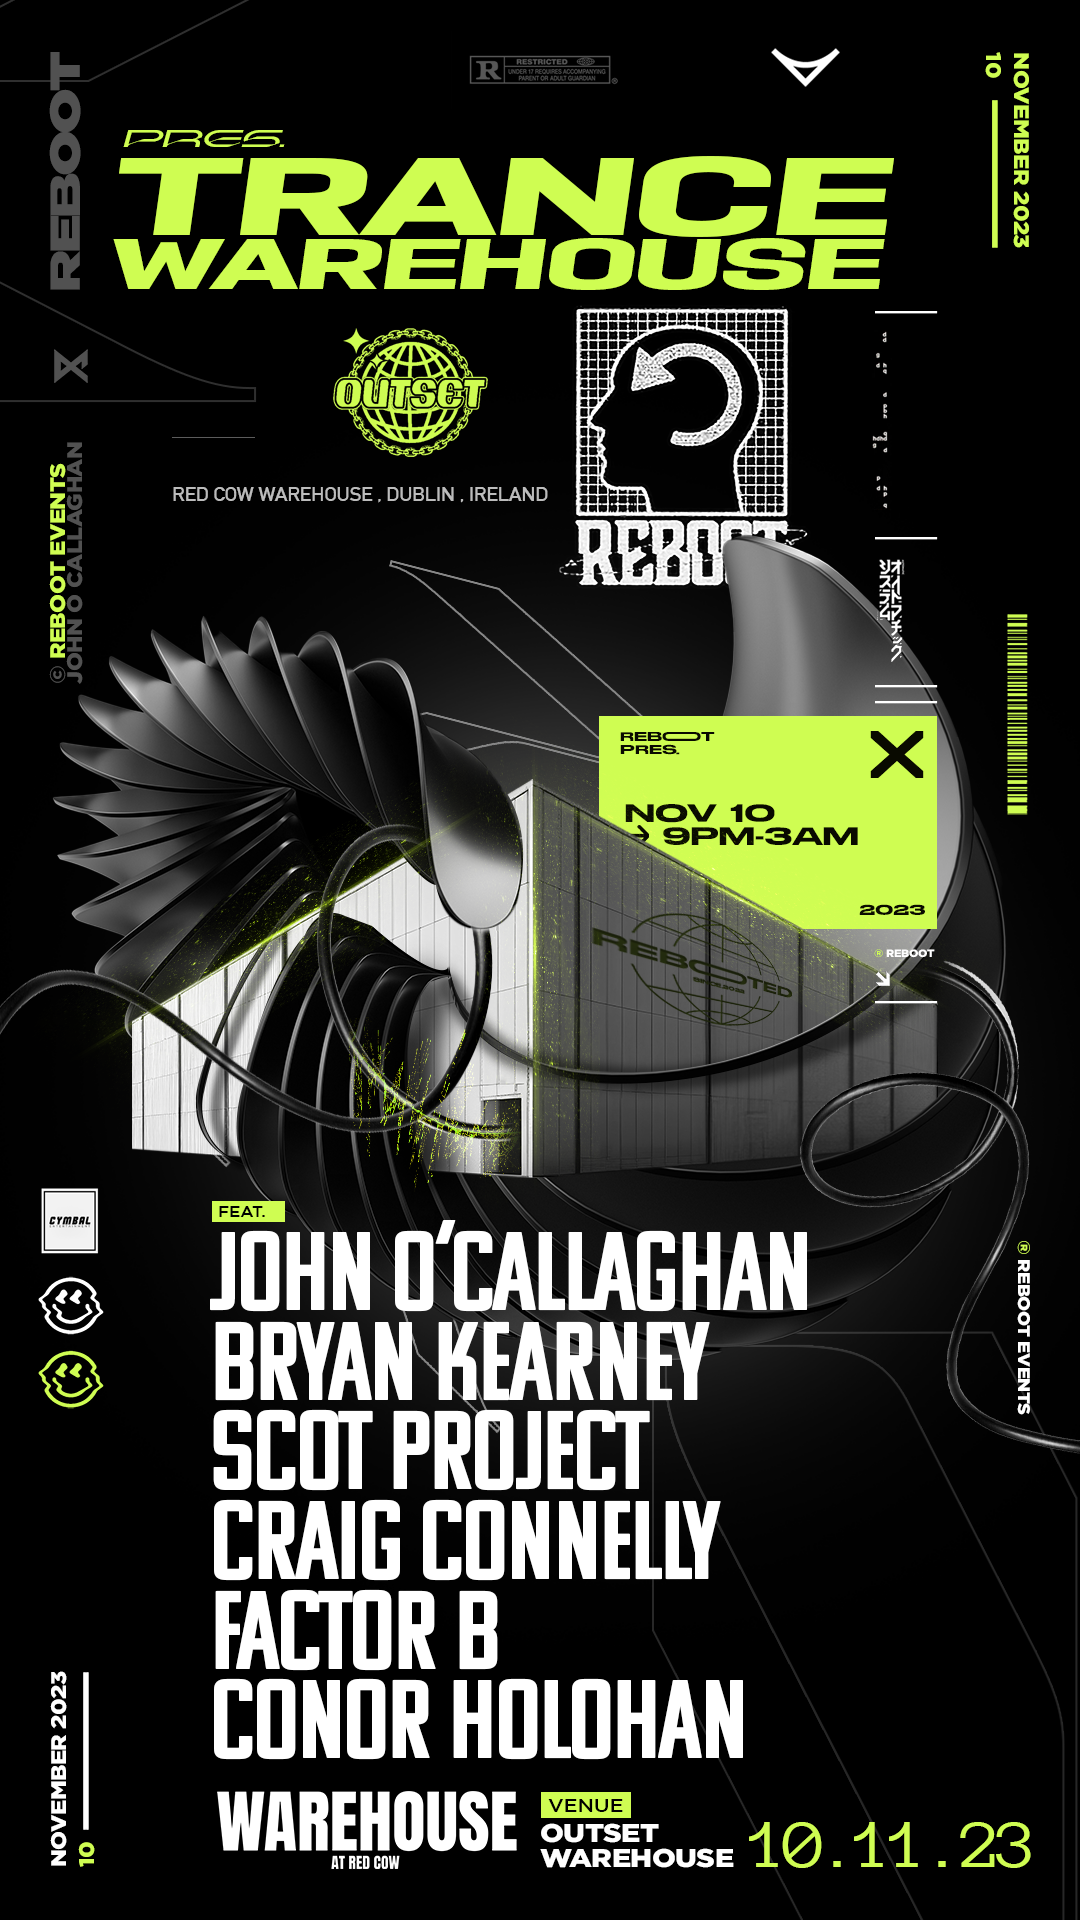 Reboot presents: John O'Callaghan, Bryan Kearney, Scot Project at Warehouse Dublin - フライヤー表